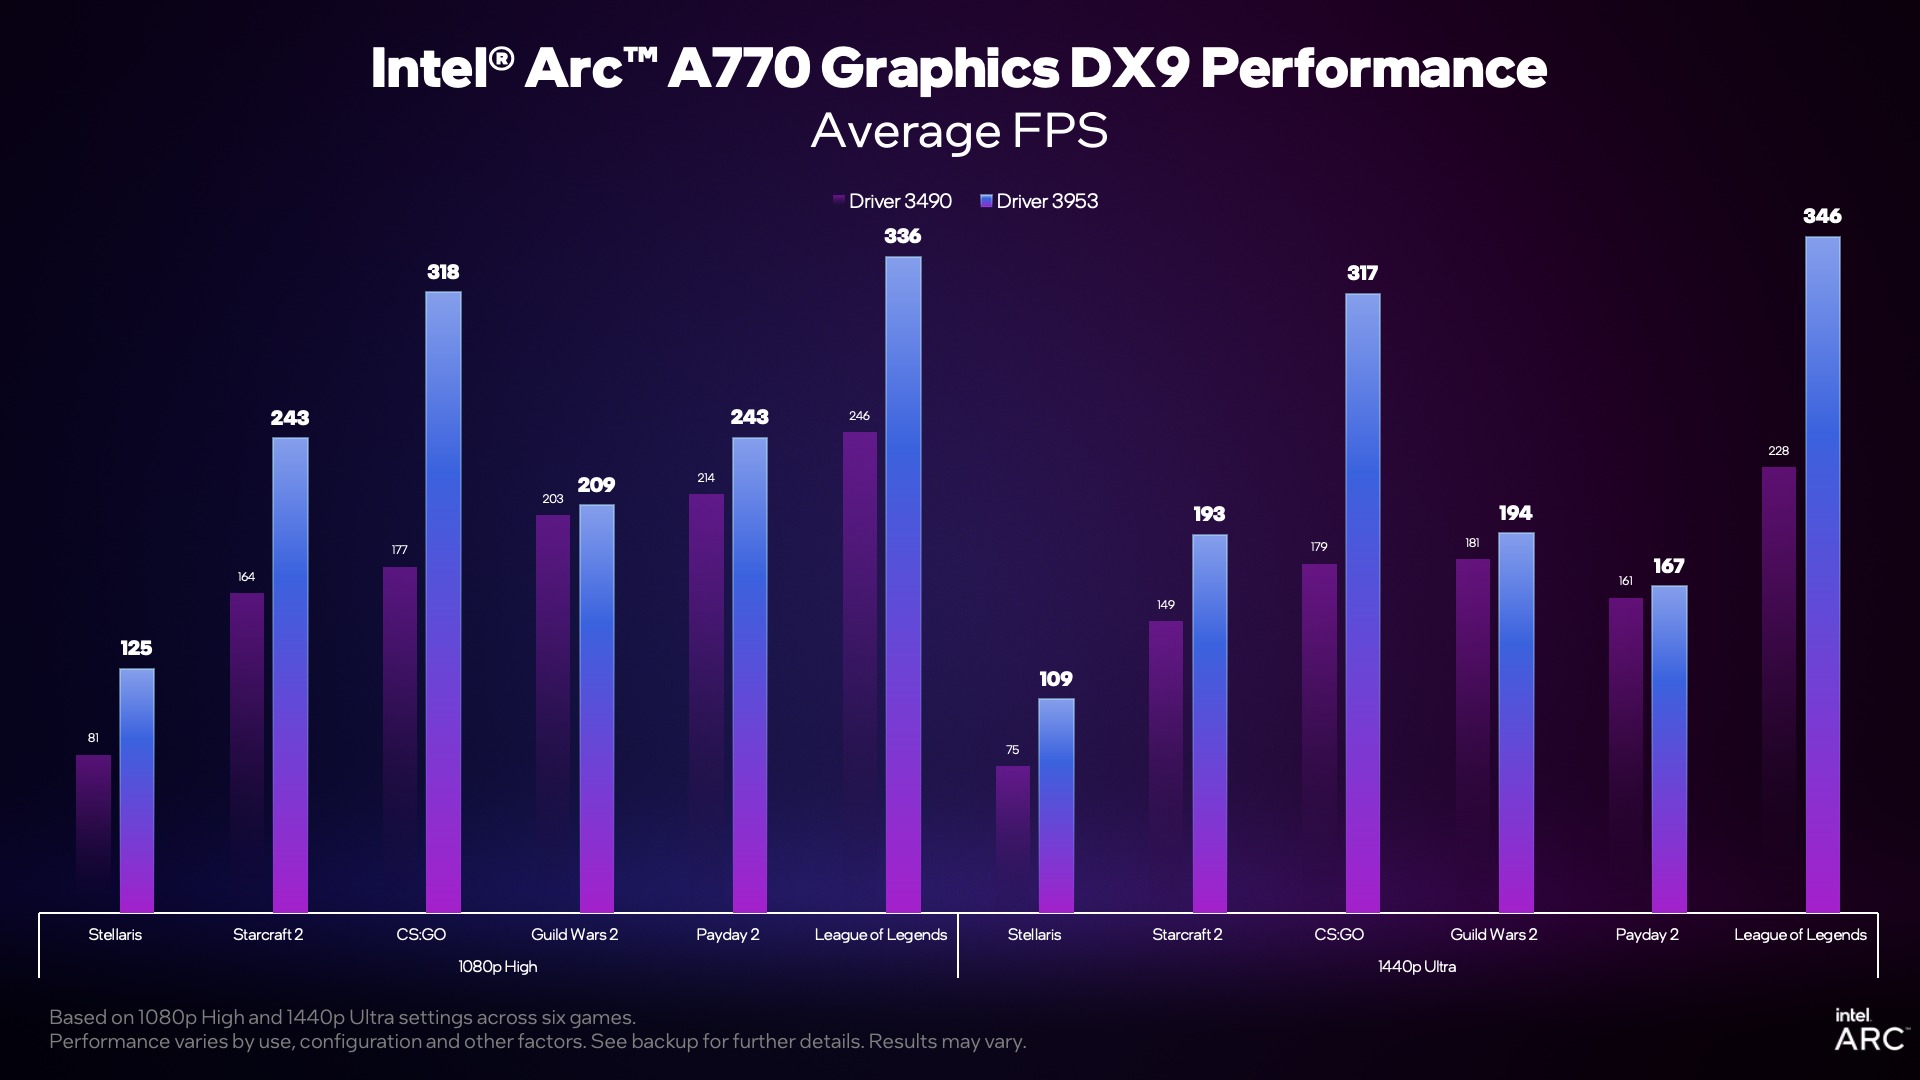 intel arc dx9 update 6 อินเทลเผยไดร์เวอร์ใหม่การ์ดจอ Intel Arc ช่วยเพิ่มประสิทธิภาพสำหรับเกม DX9 หลากหลายเกมส์รวมไปถึง CS:GO ที่ประสิทธิภาพแรงขึ้น 1.8x เท่า 